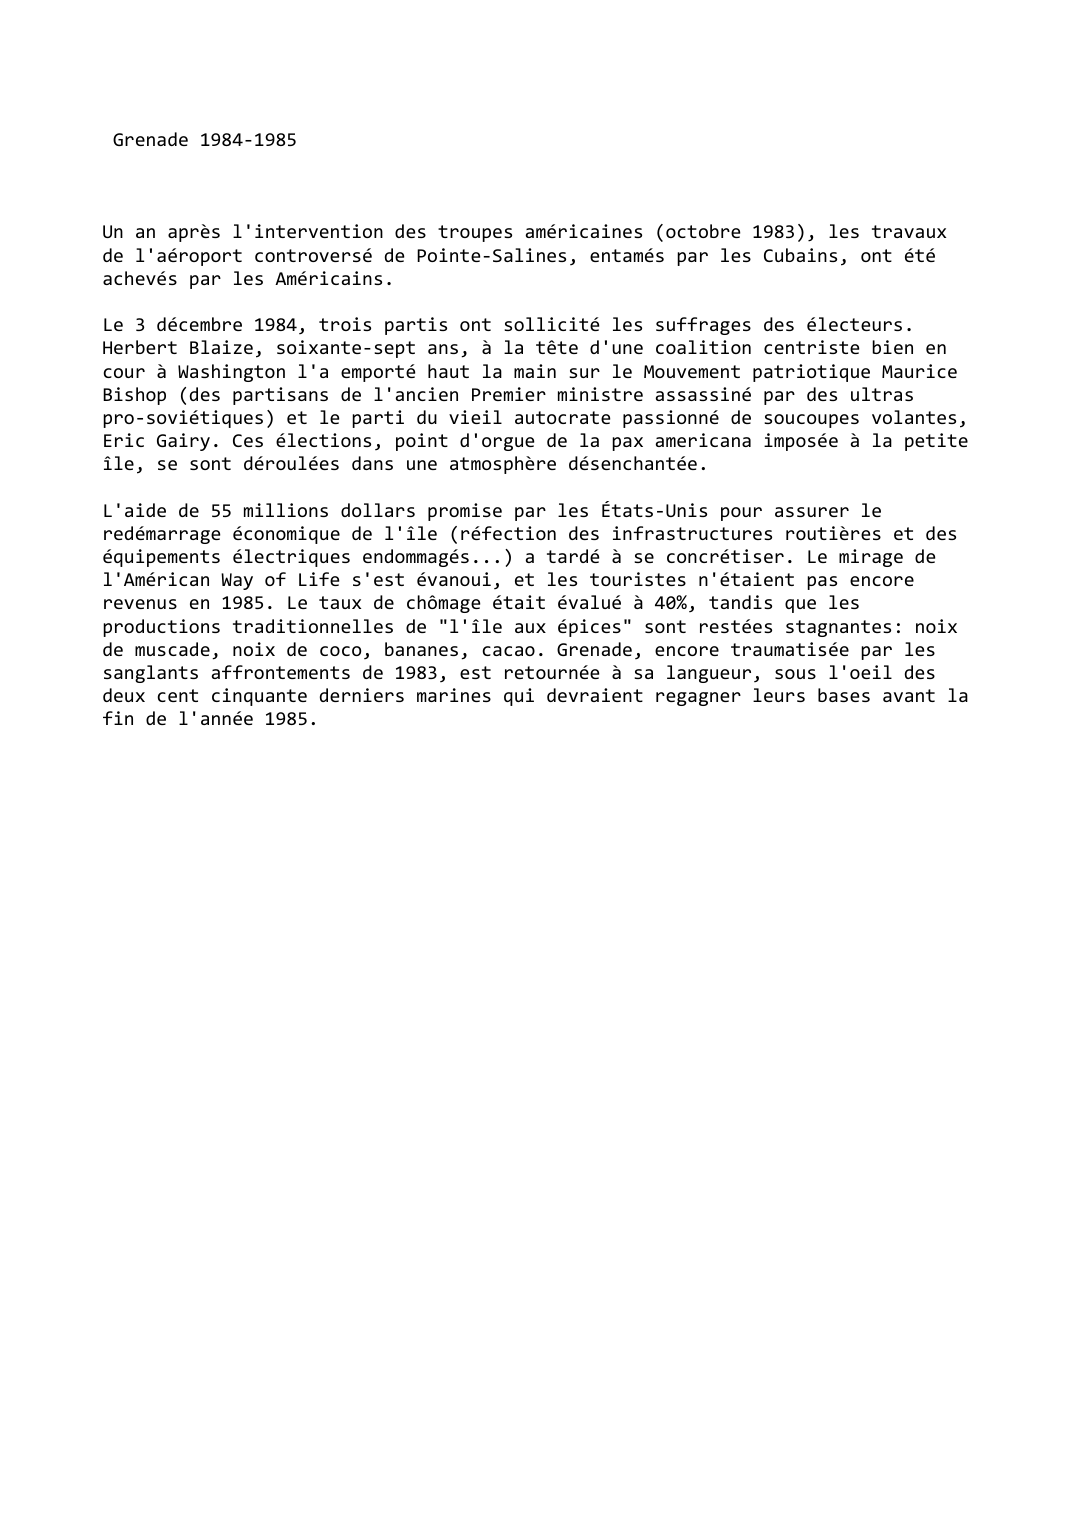 Prévisualisation du document Grenade (1984-1985)